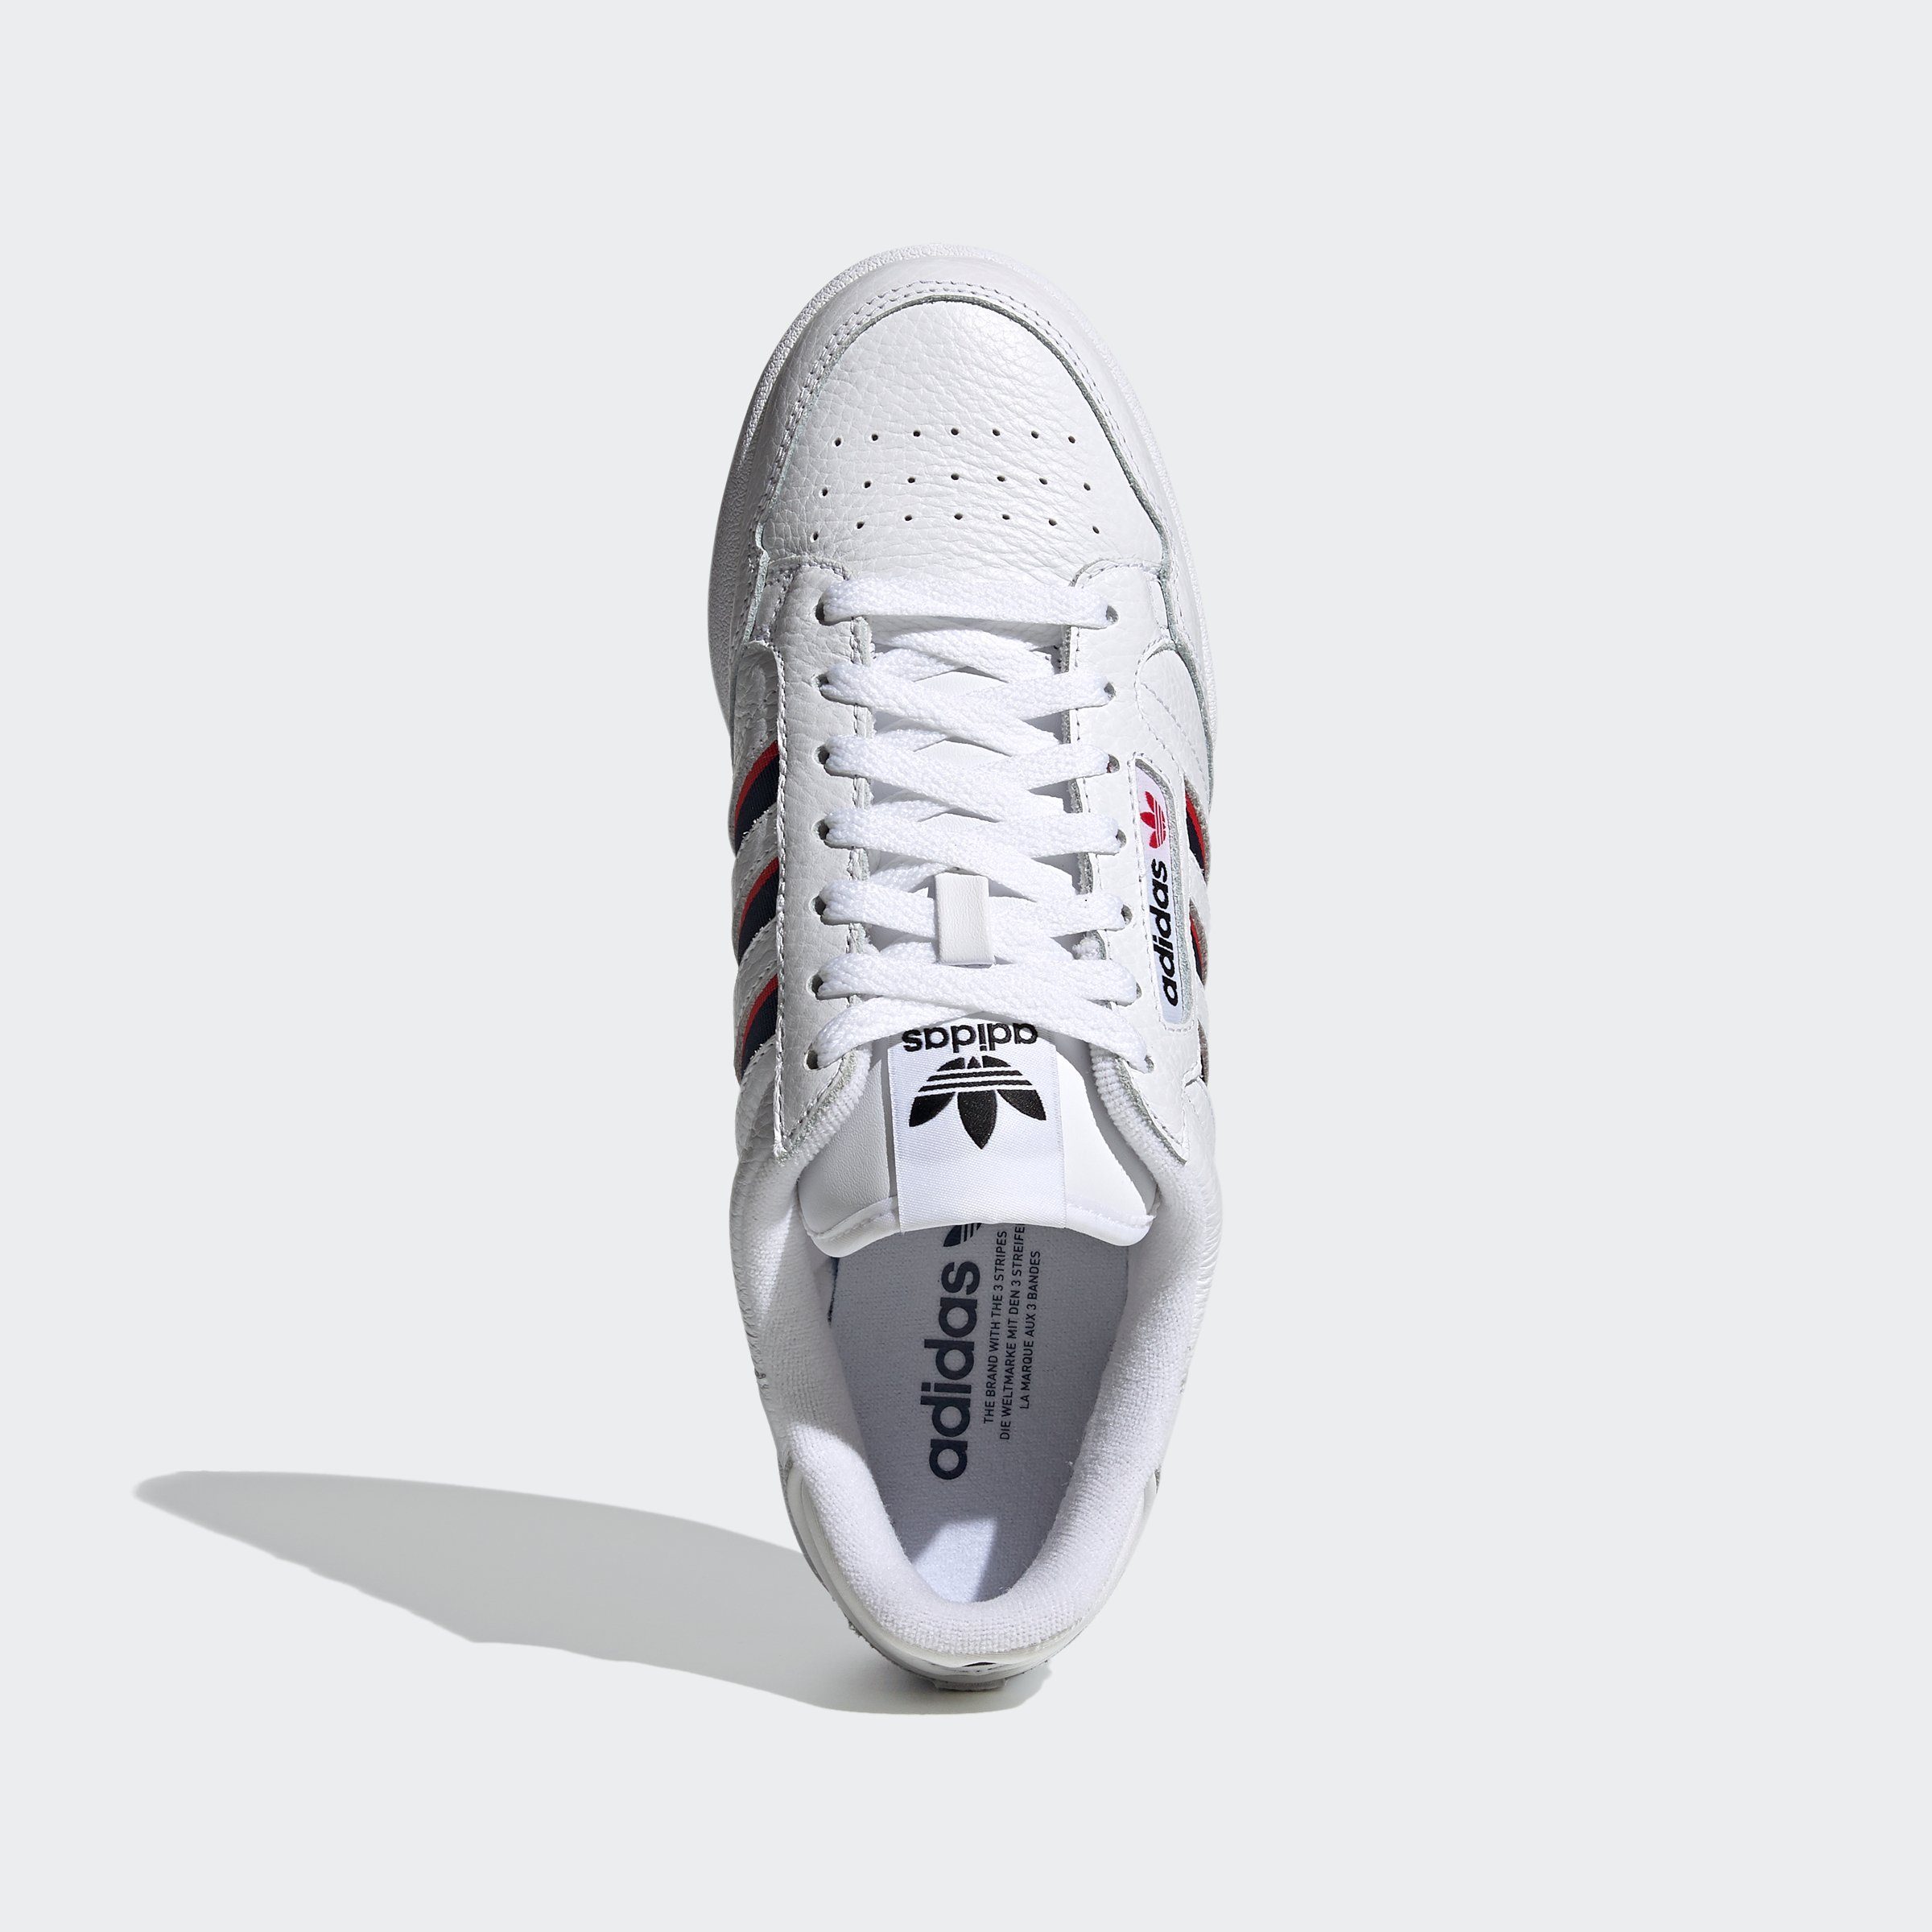 adidas Originals CONTINENTAL 80 STRIPES FTWWHT-CONAVY-VIVRED Sneaker